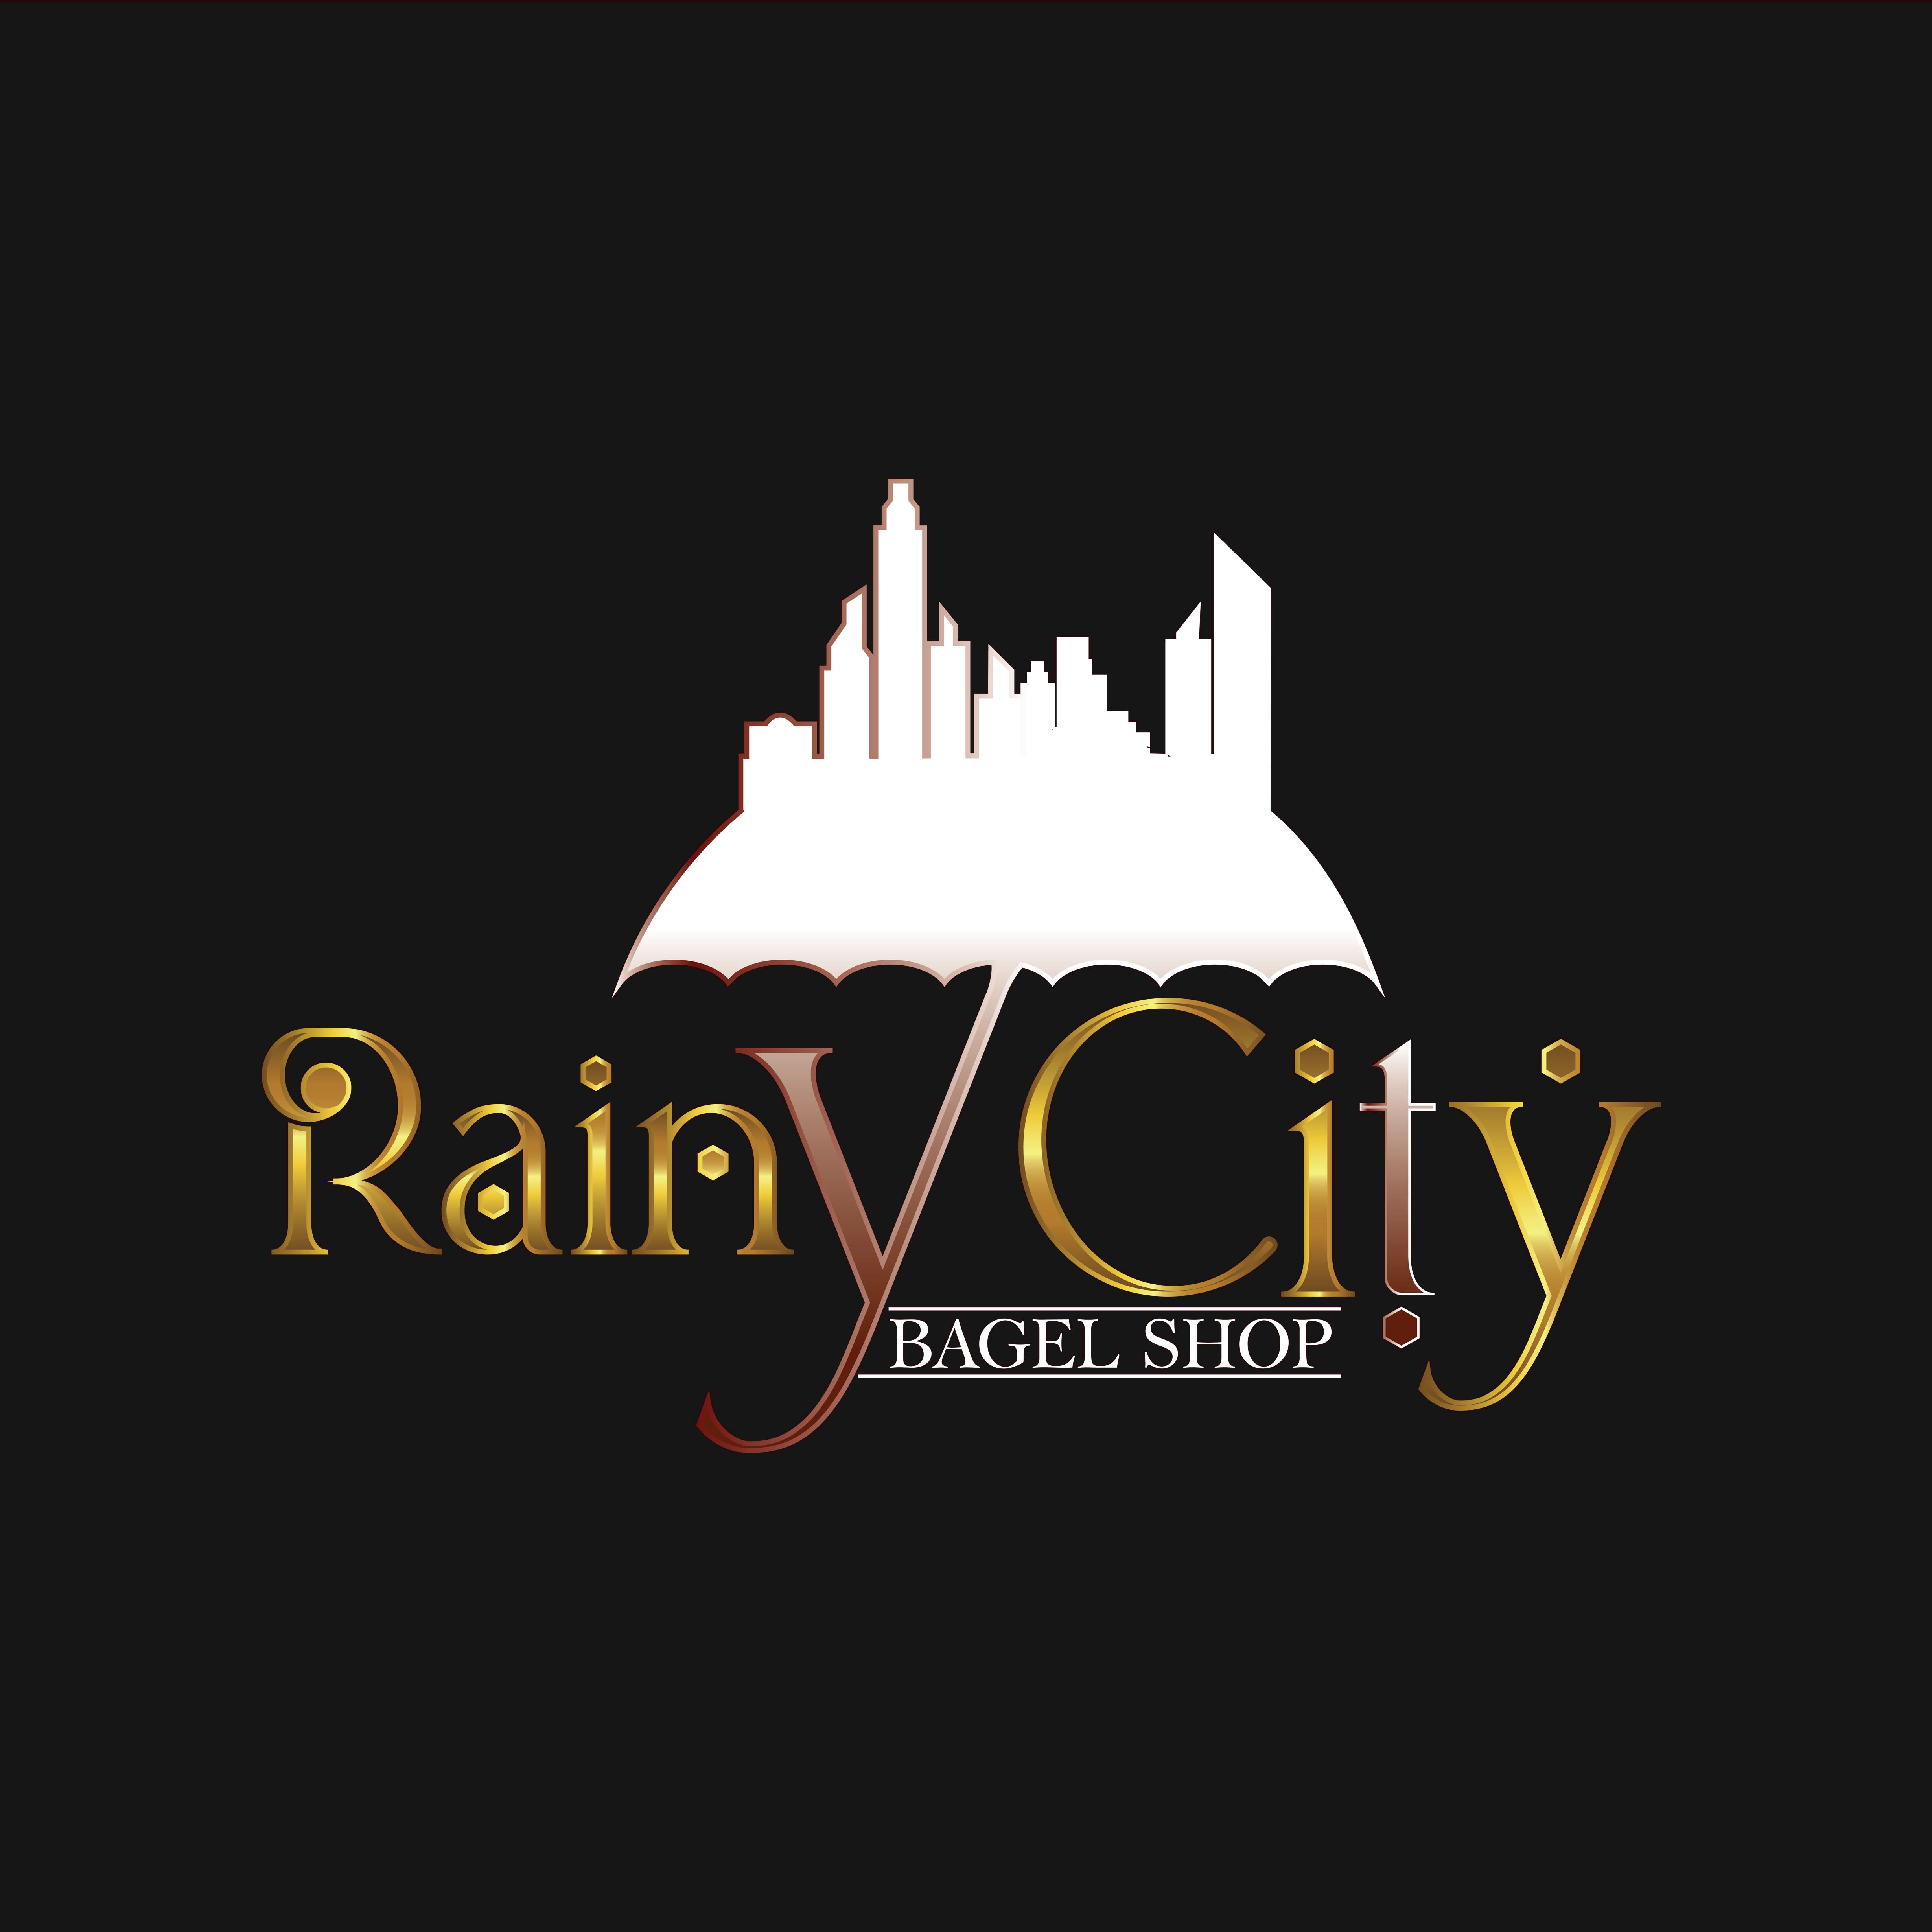 Rainy City Bagel Shop